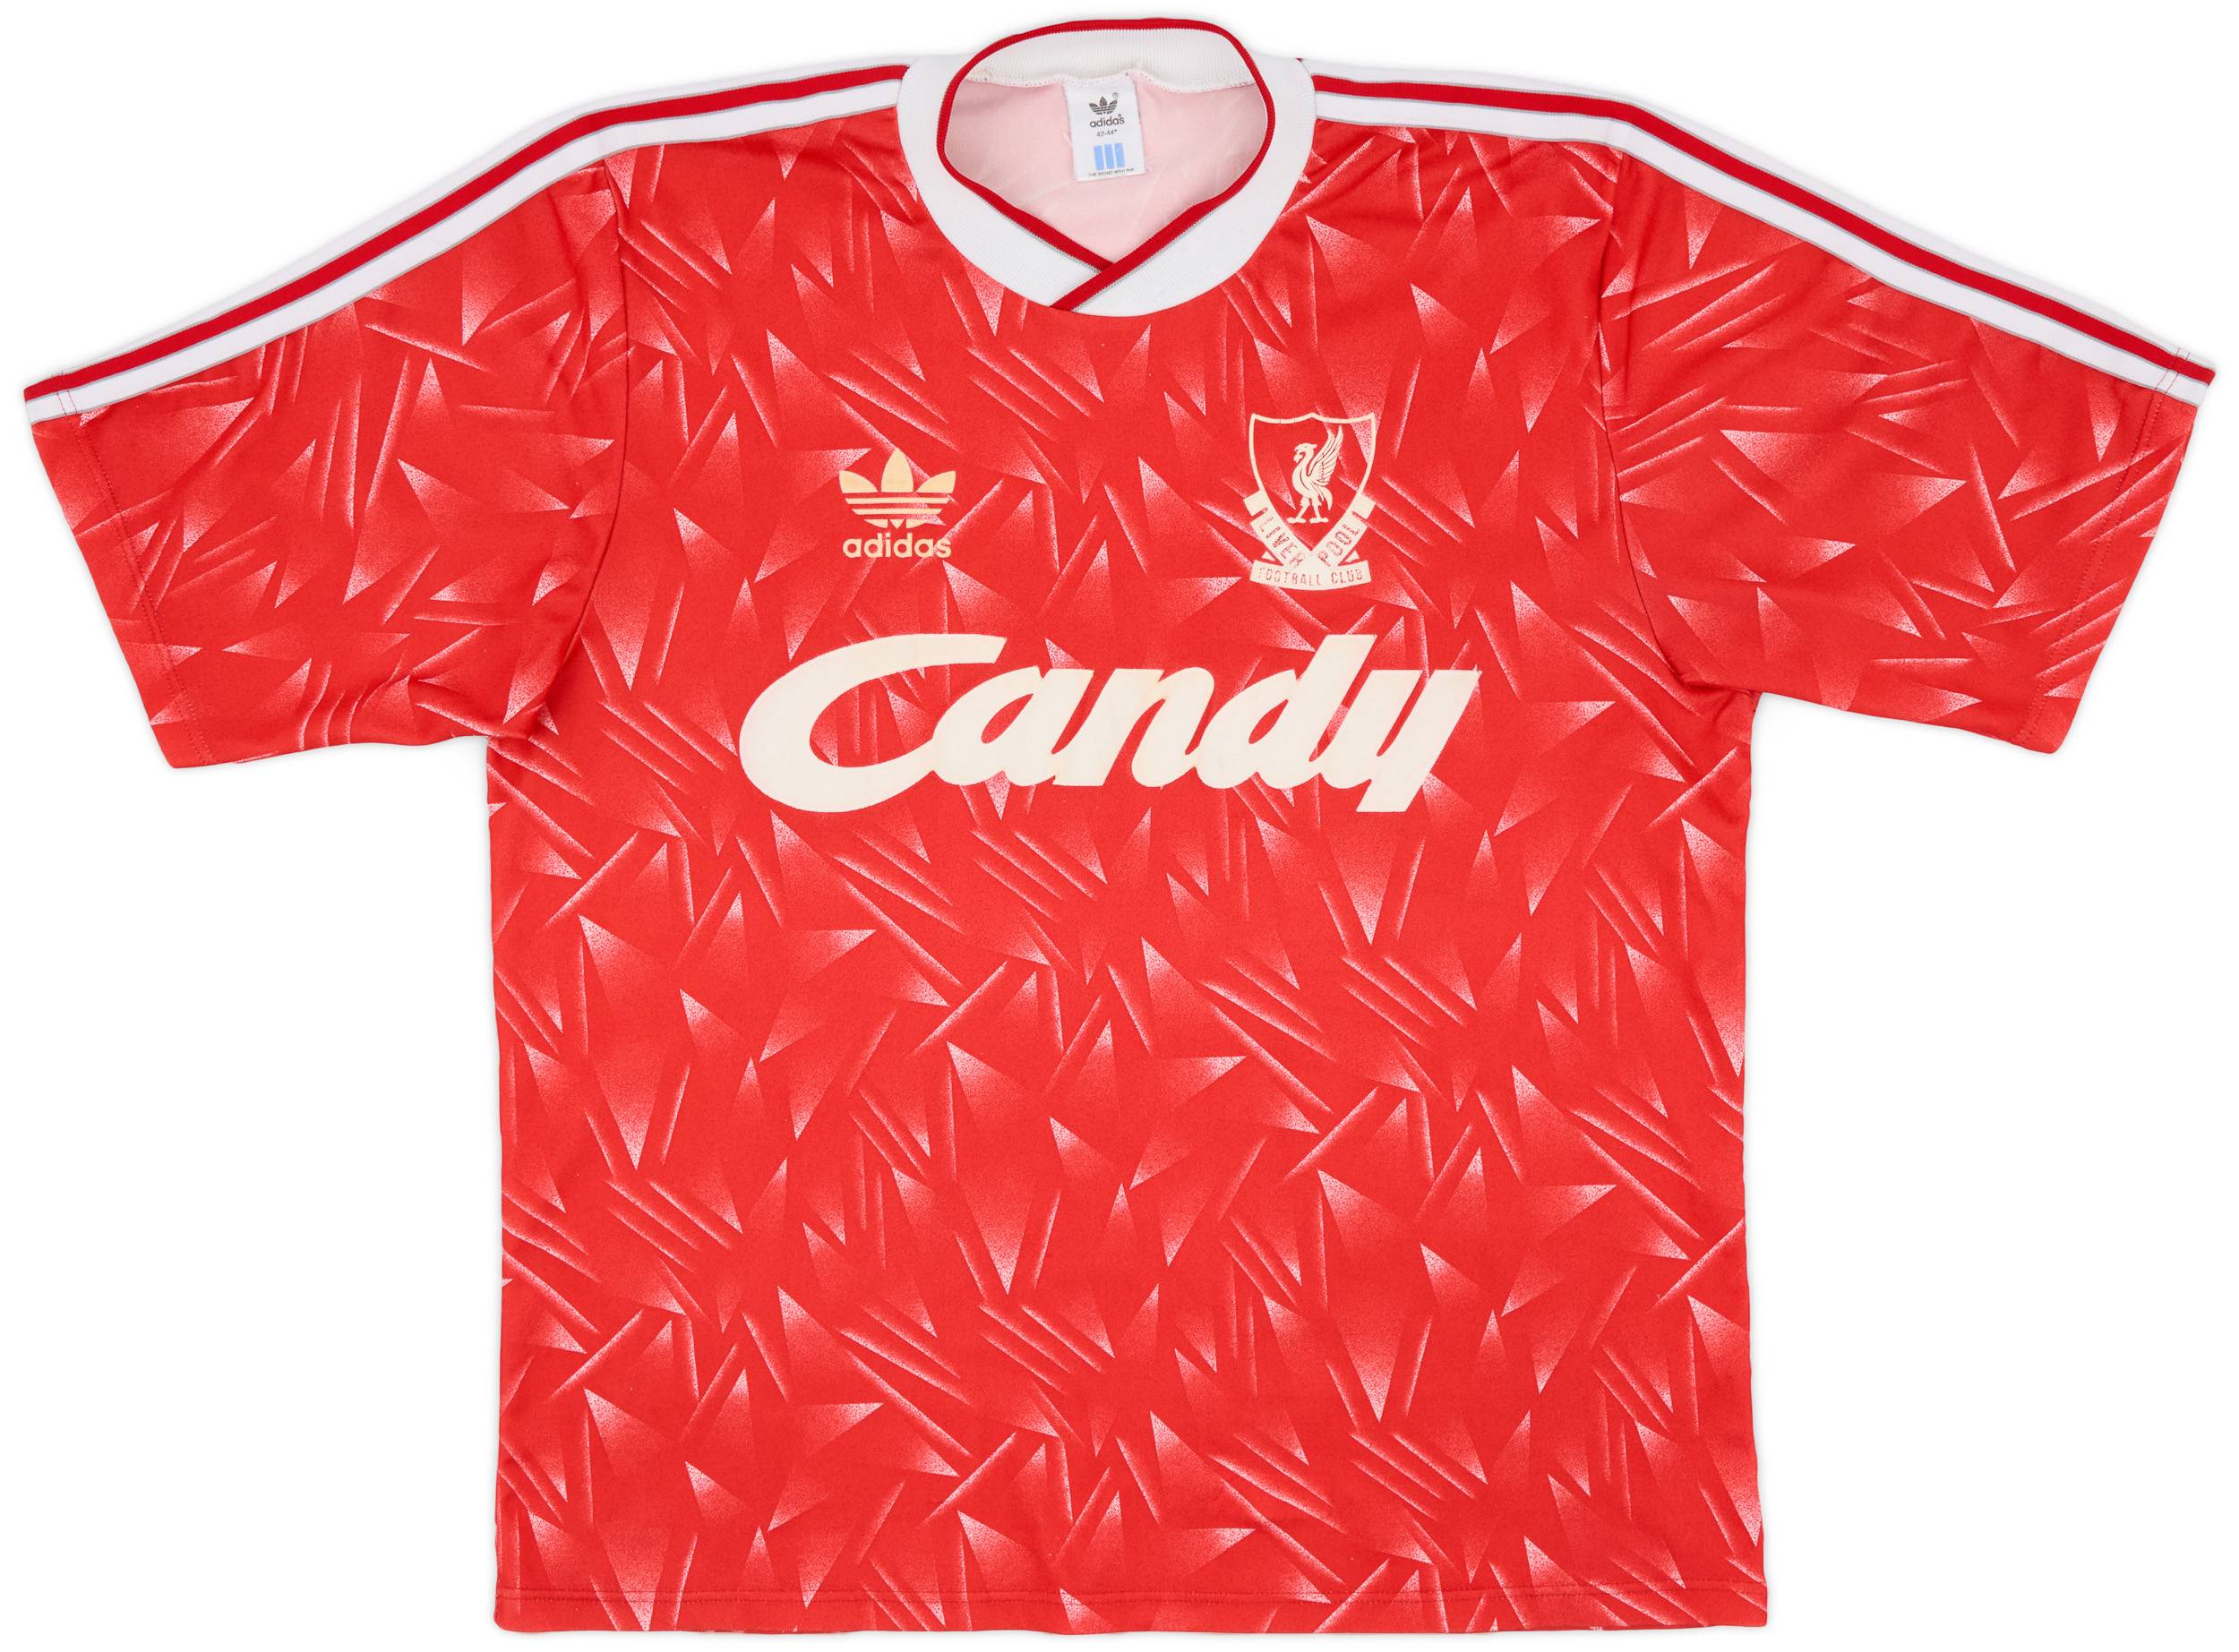 1989-91 Liverpool Home Shirt - 8/10 - (L)